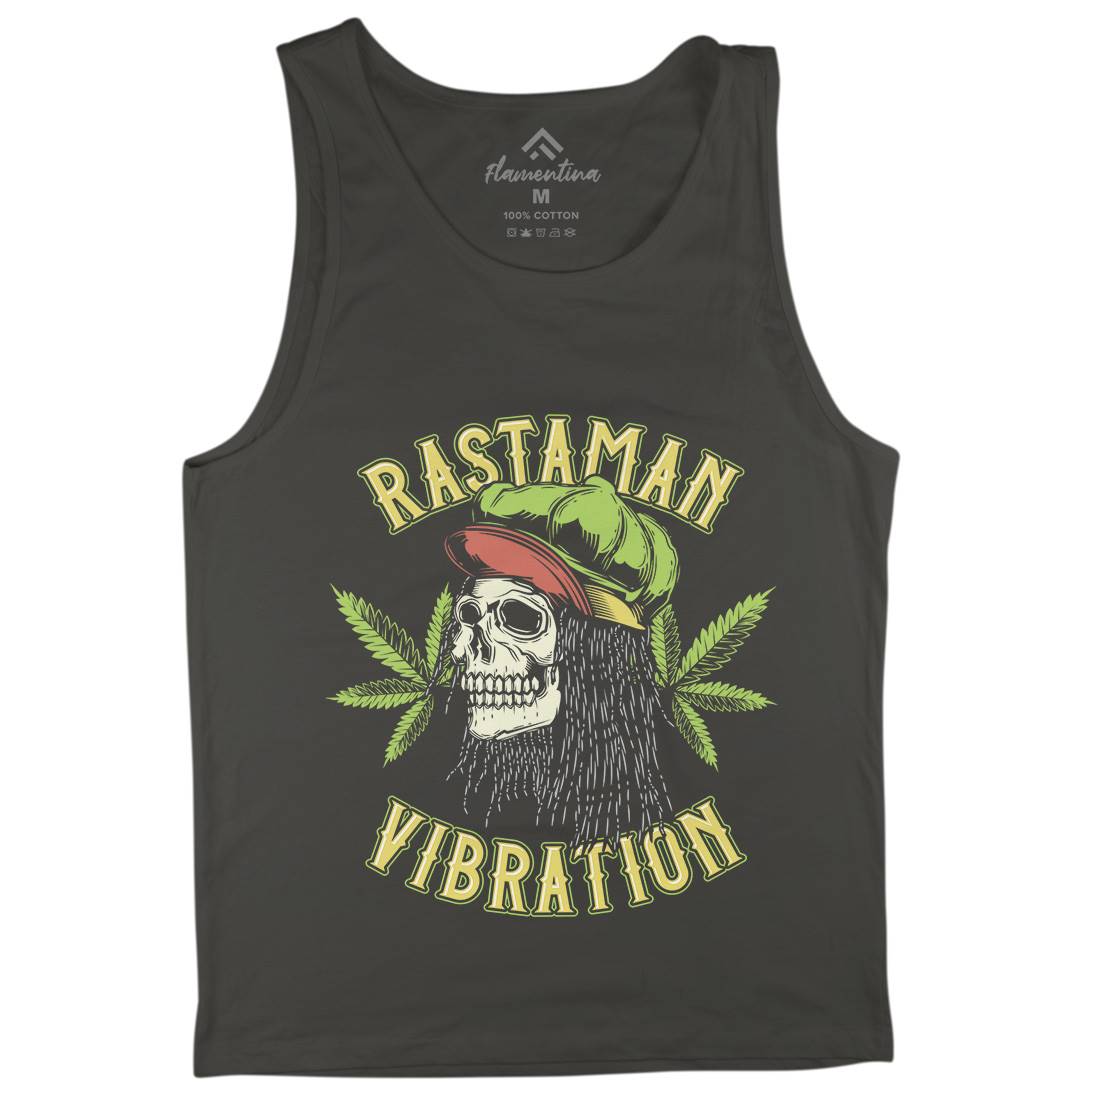 Rastaman Vibration Mens Tank Top Vest Drugs B805